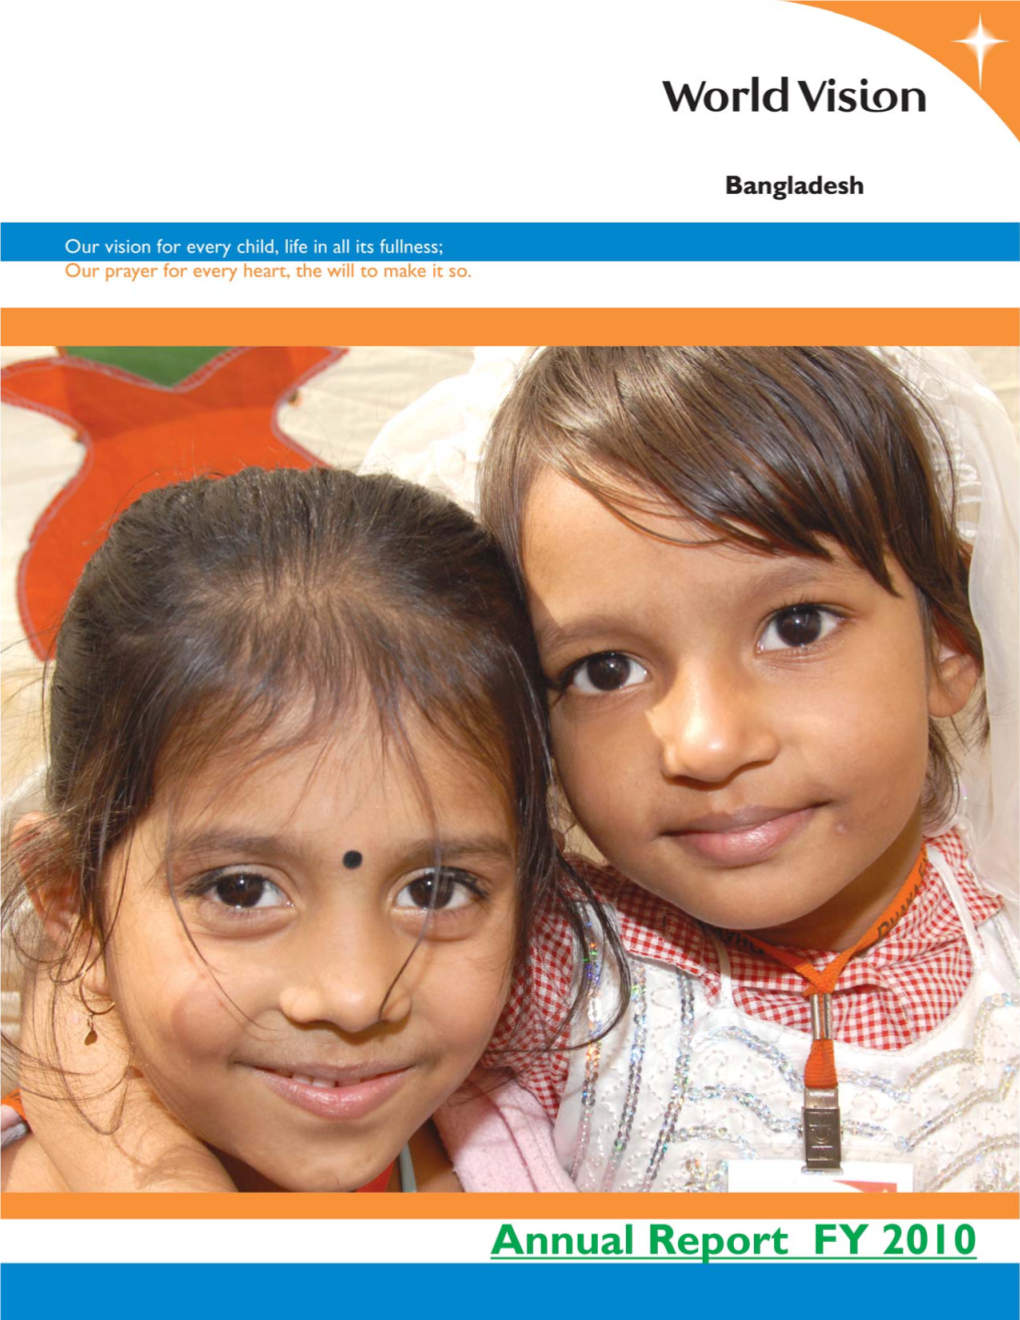 Annual Report-Bangladesh FY 2010.Pdf